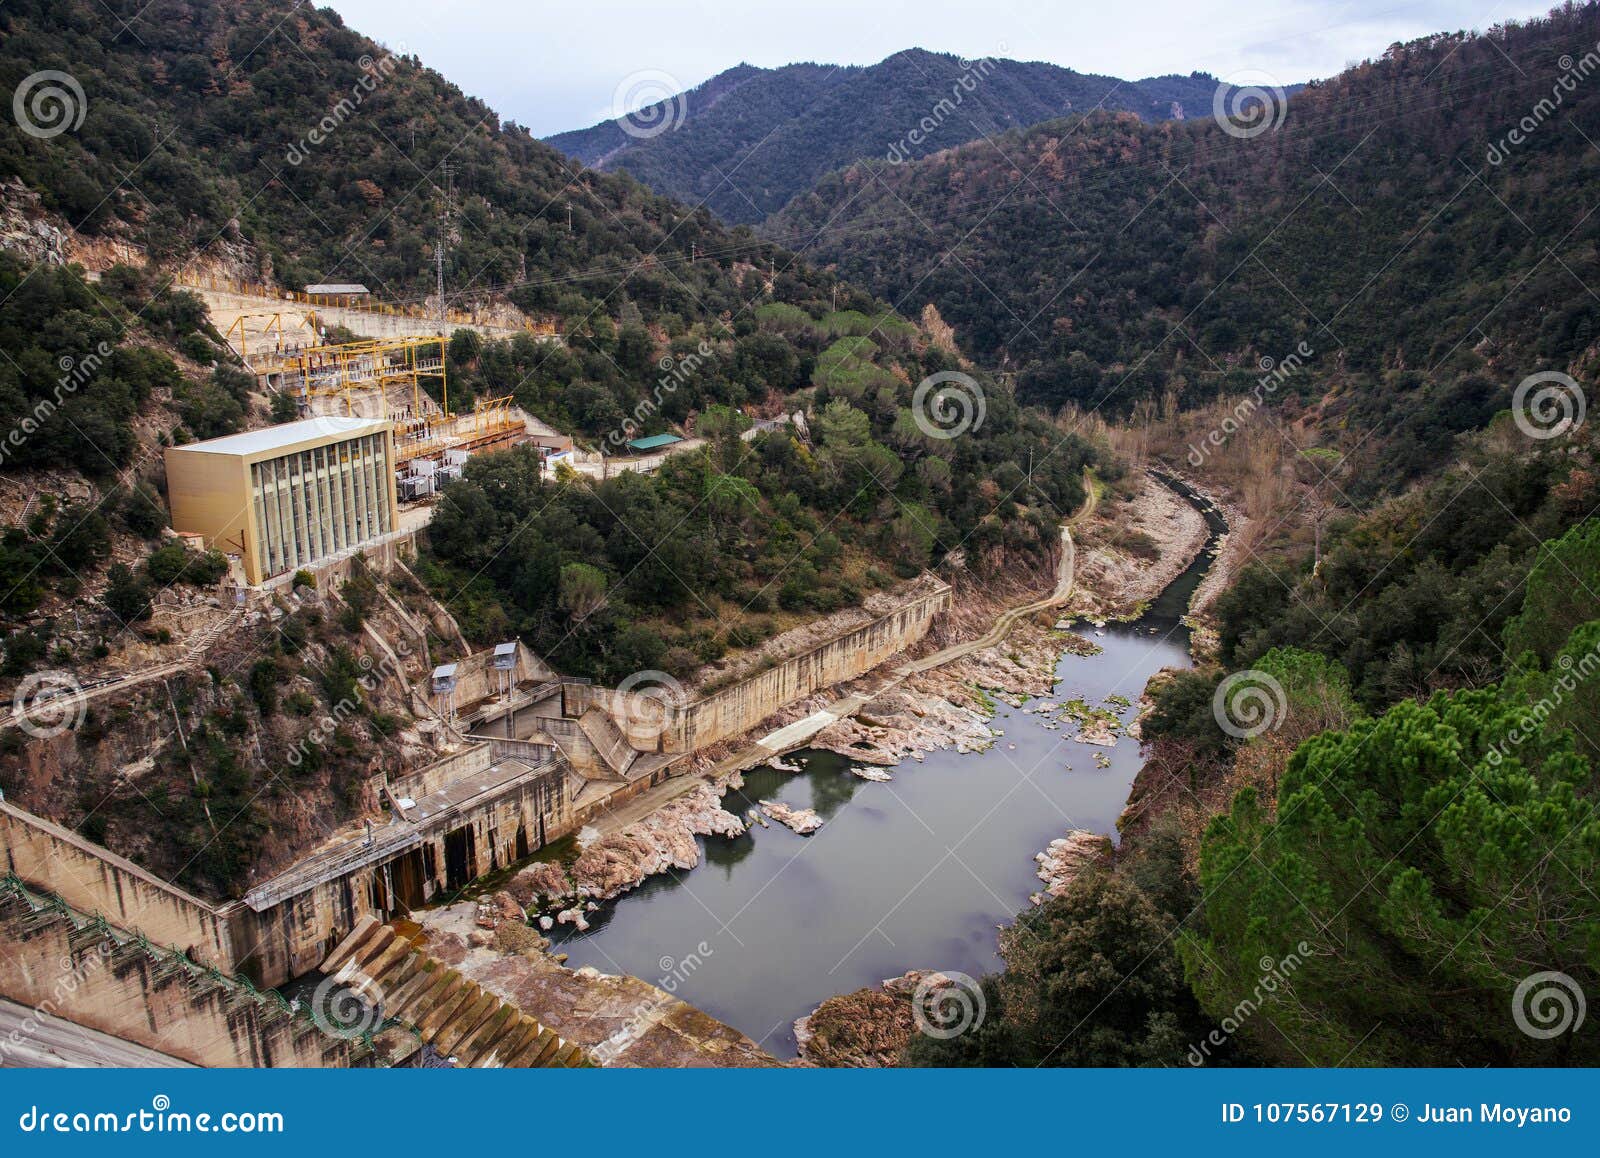 sau reservoir in girona province, catalonia, spain